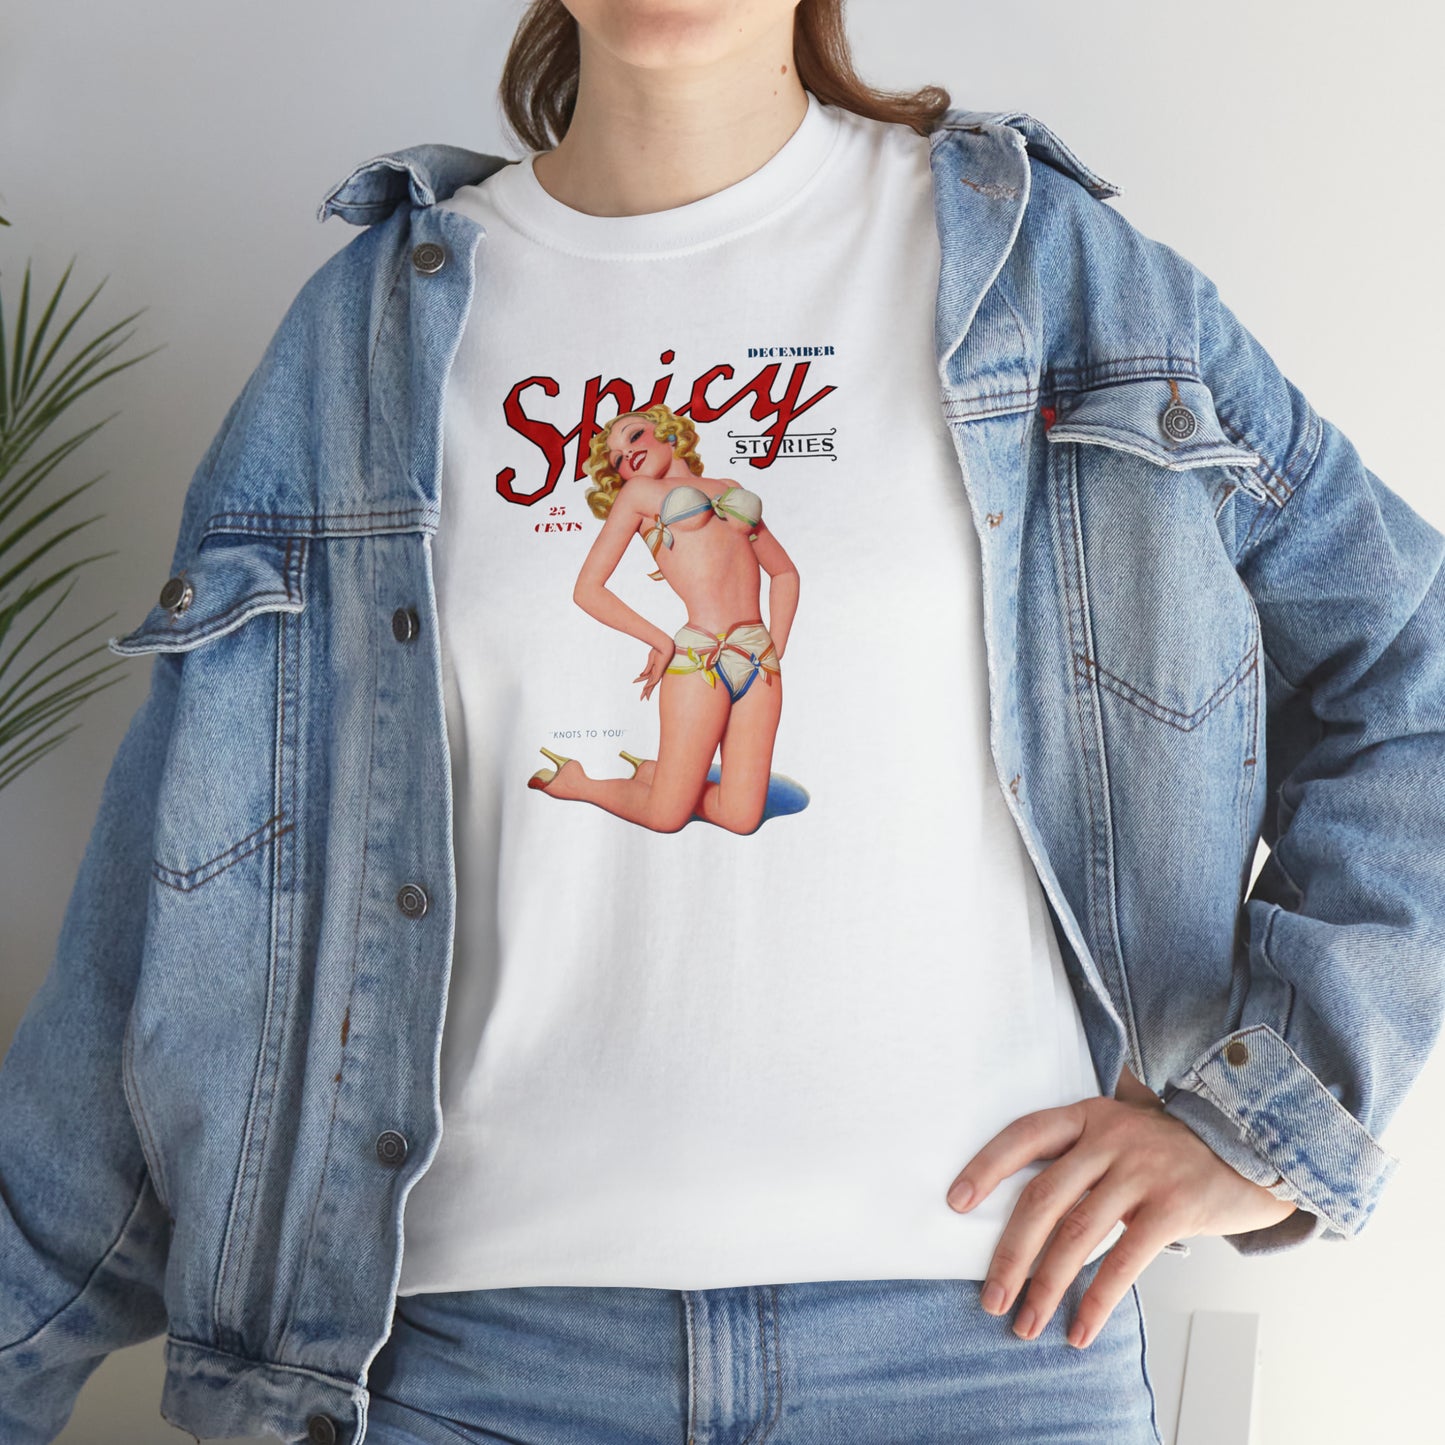 Spicy Stories Magazine T-Shirt